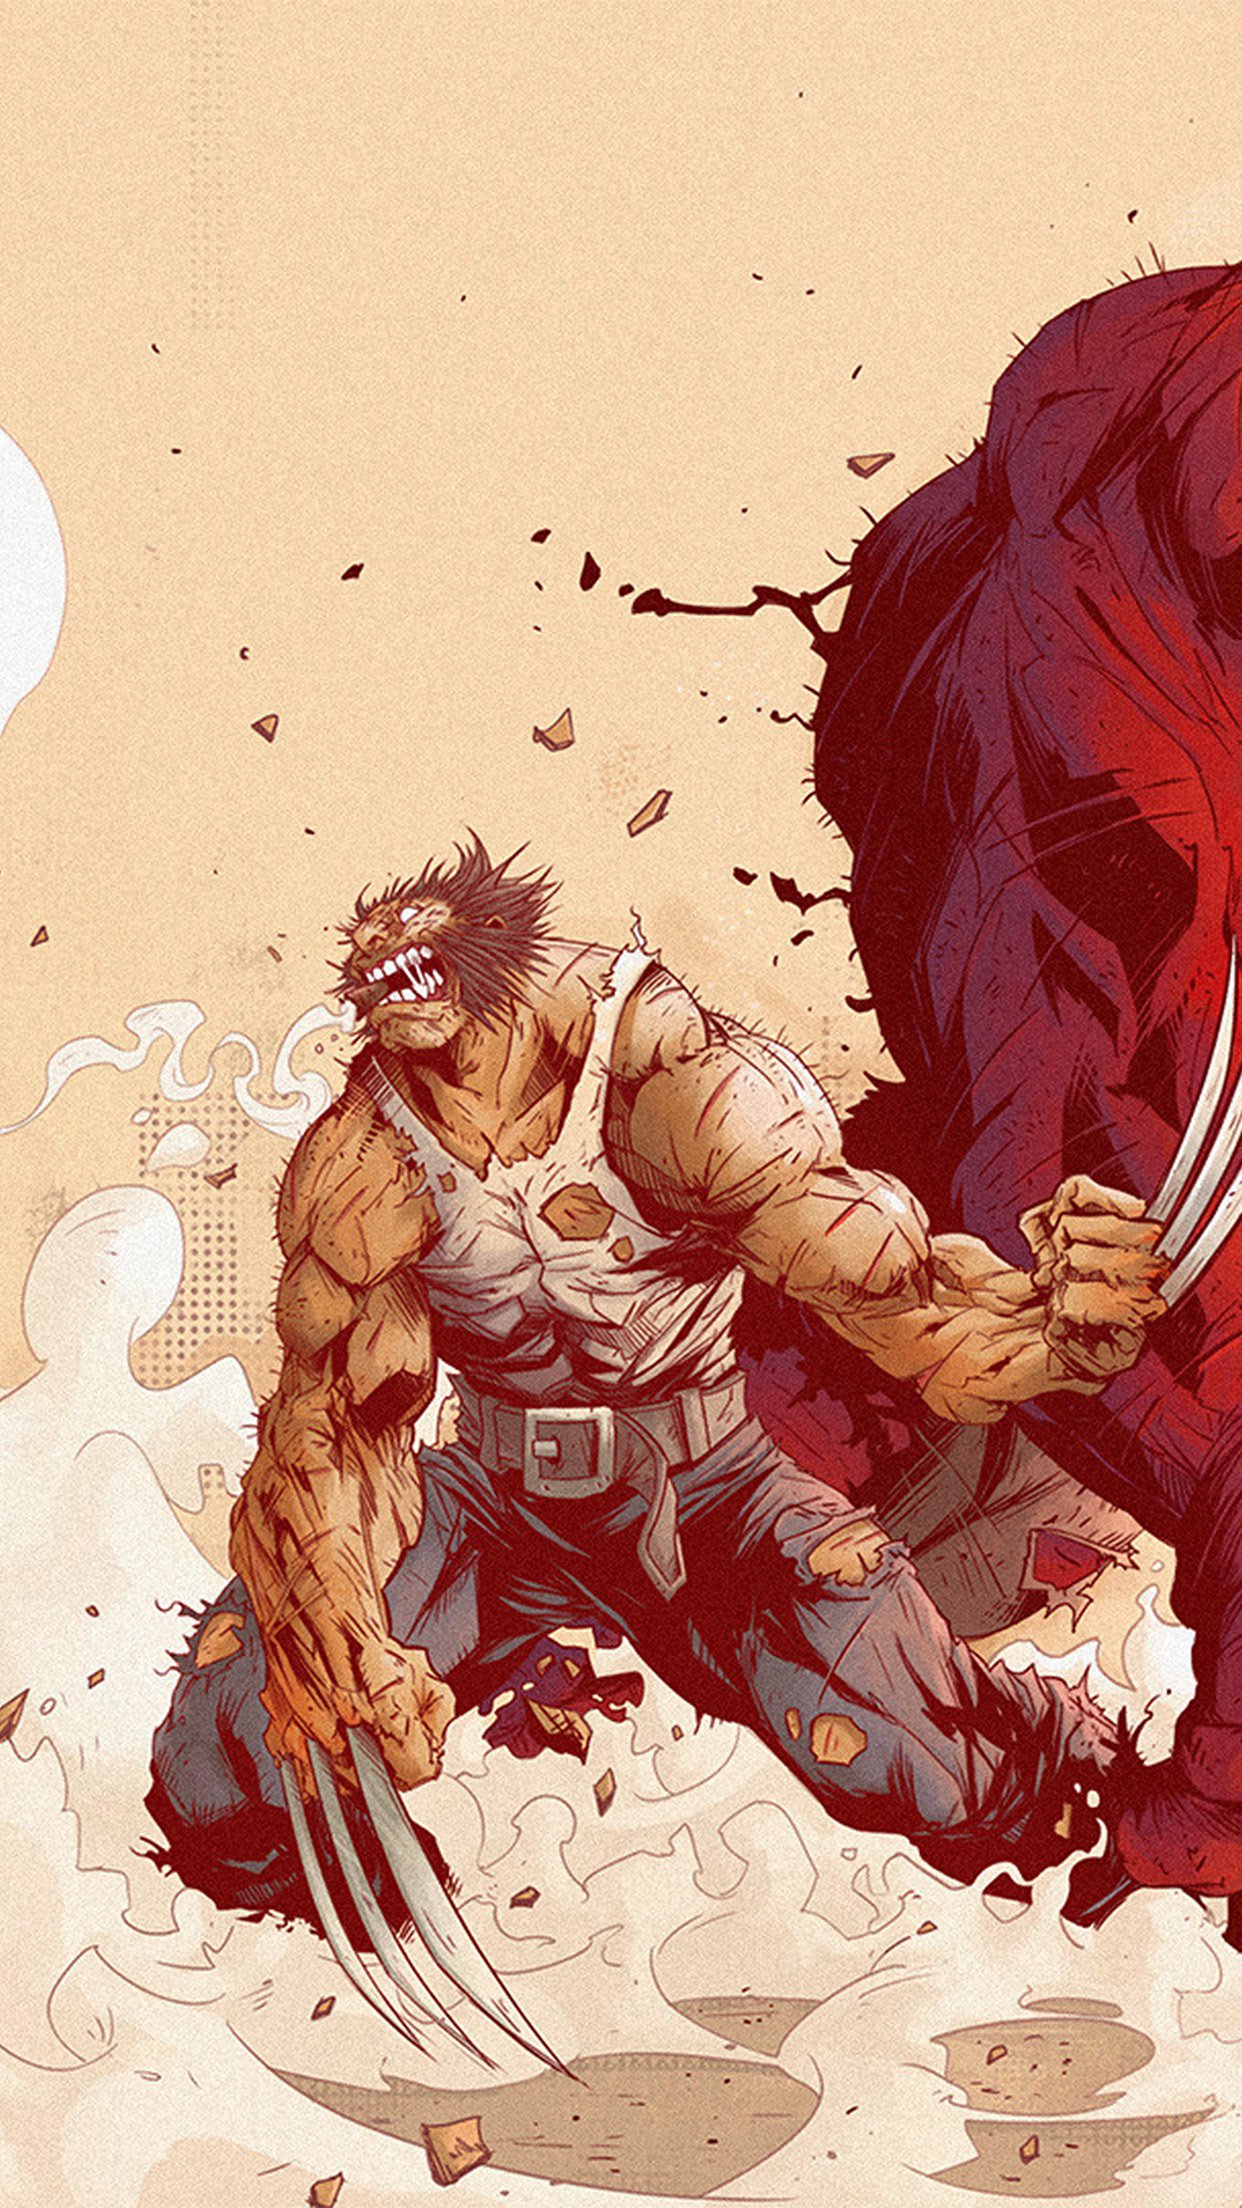 Wolverine Anime Tonton Revolver Illustration Art Android wallpaper